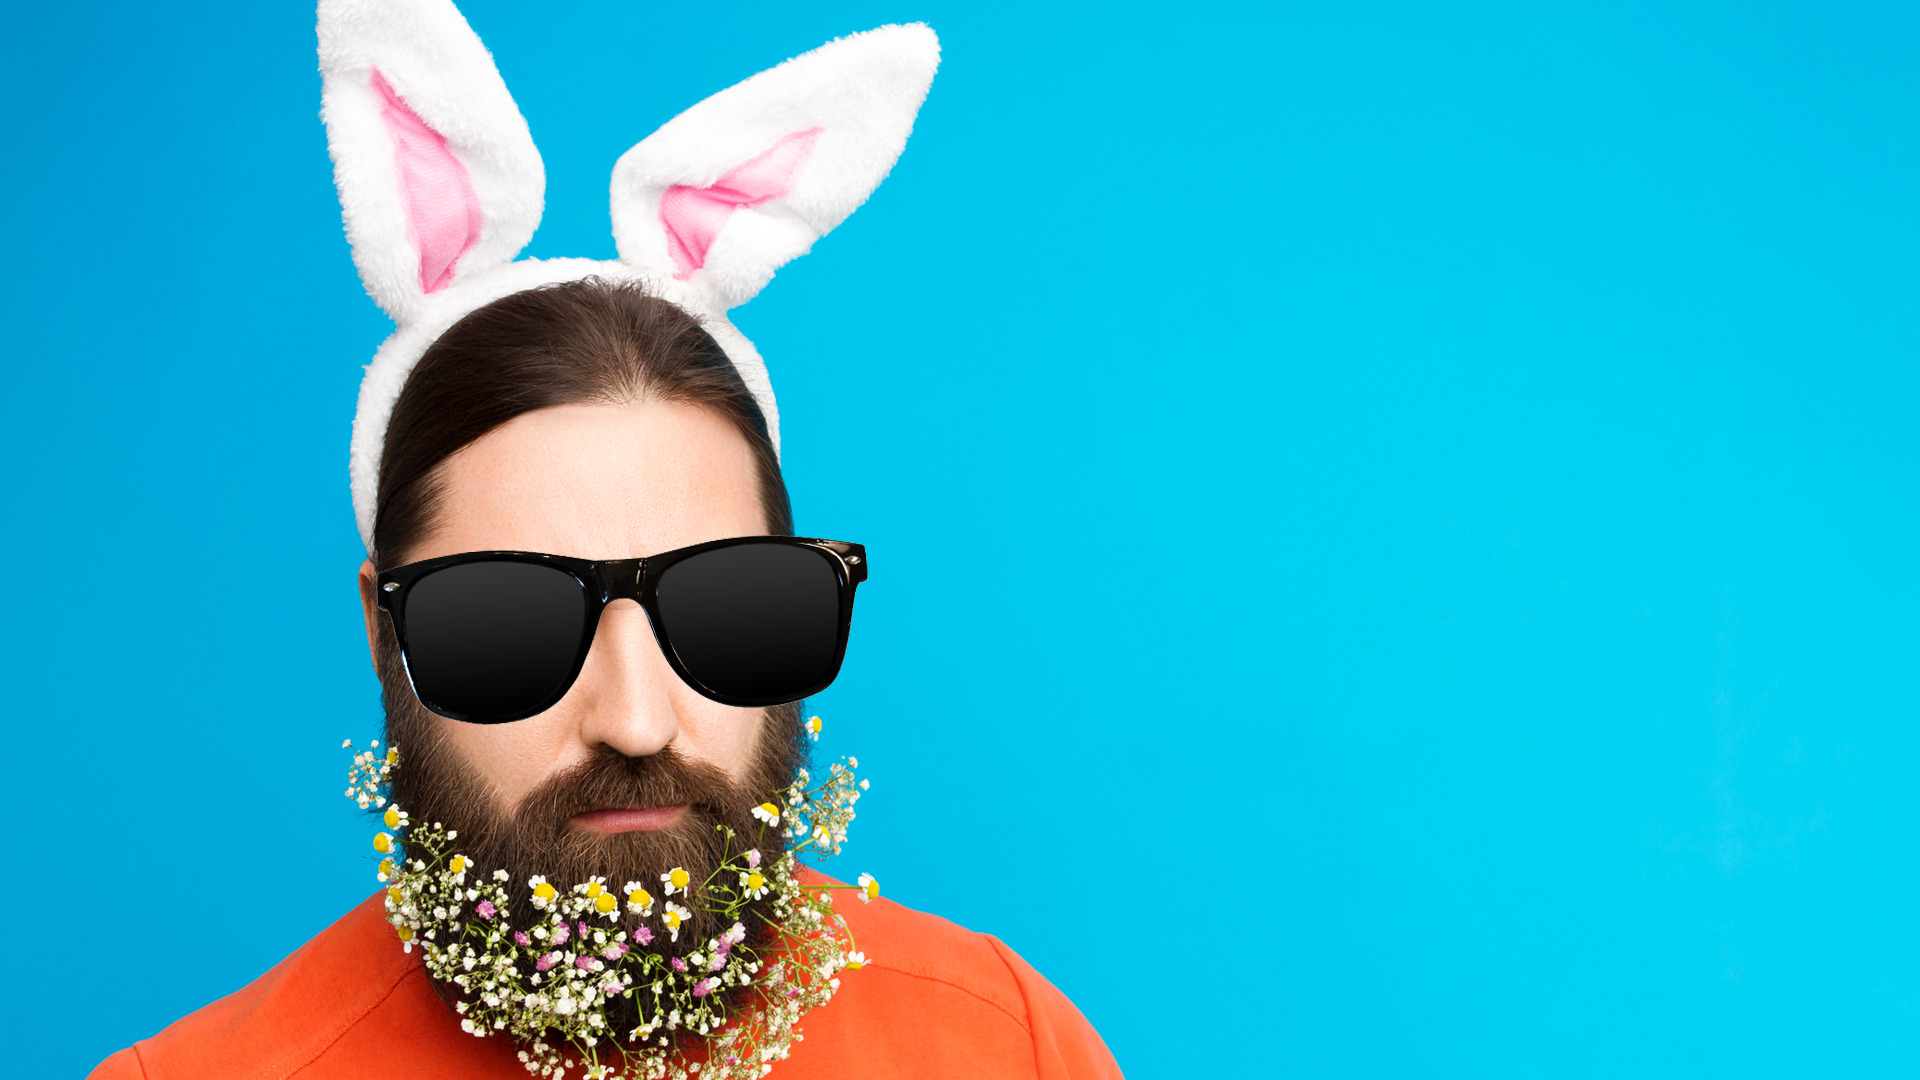 A man dressed as a rabbit